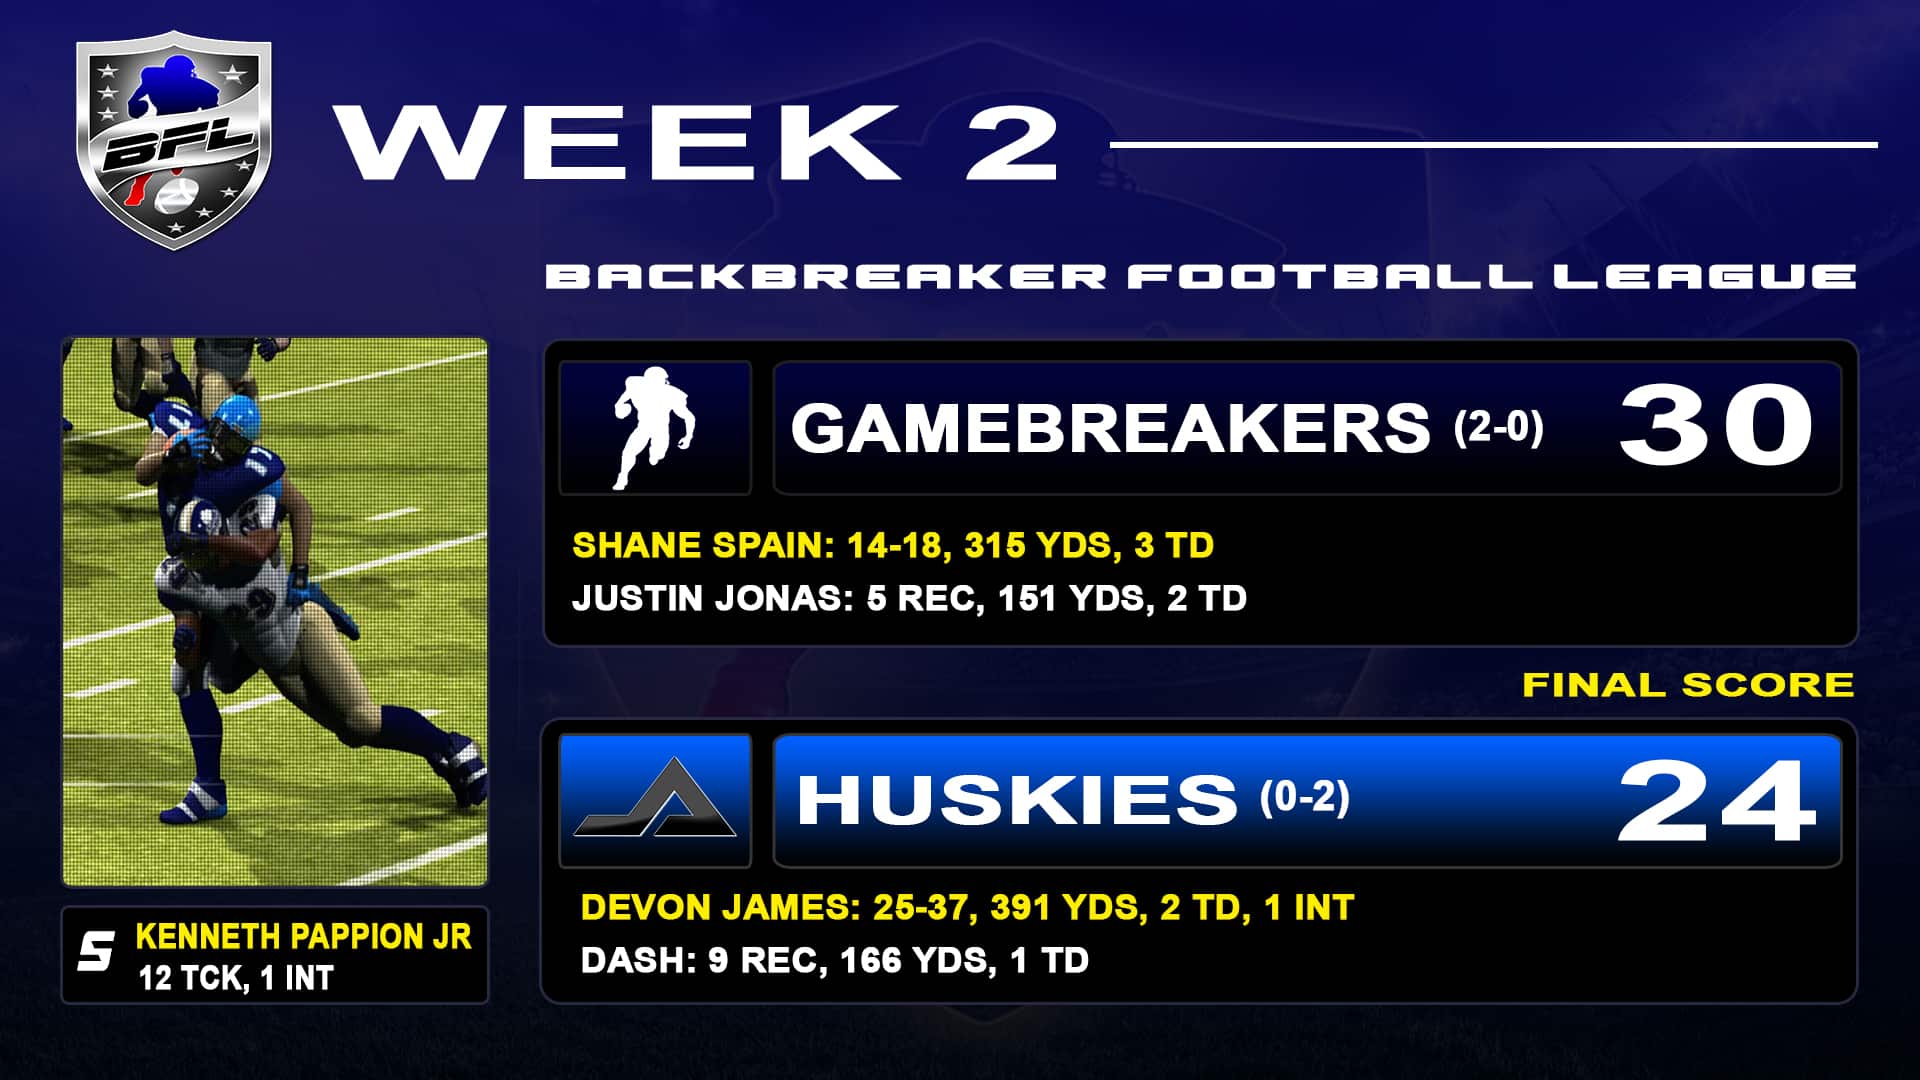 Gamebreakers vs Huskies Final Score_Backbreaker Football League